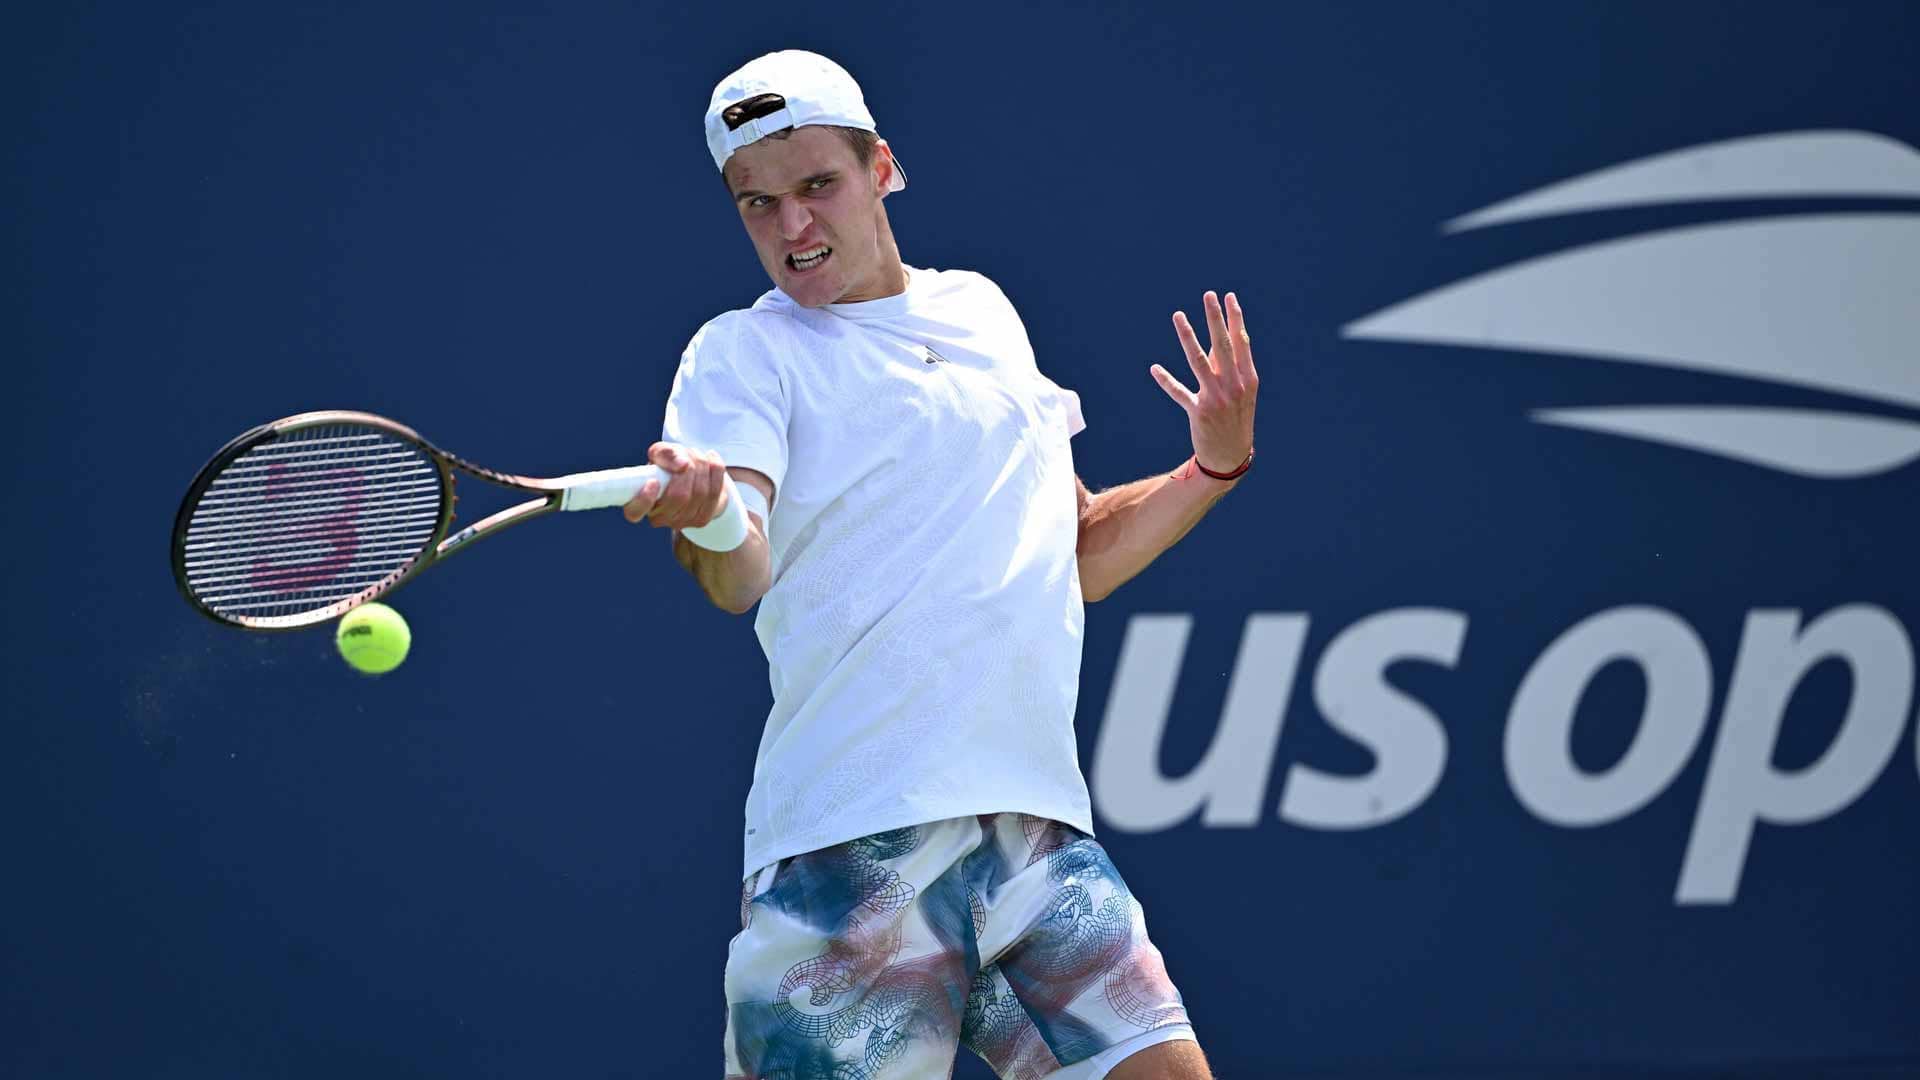 Jakub Mensik defeats Zdenek Kolar on Saturday to qualify for the US Open.